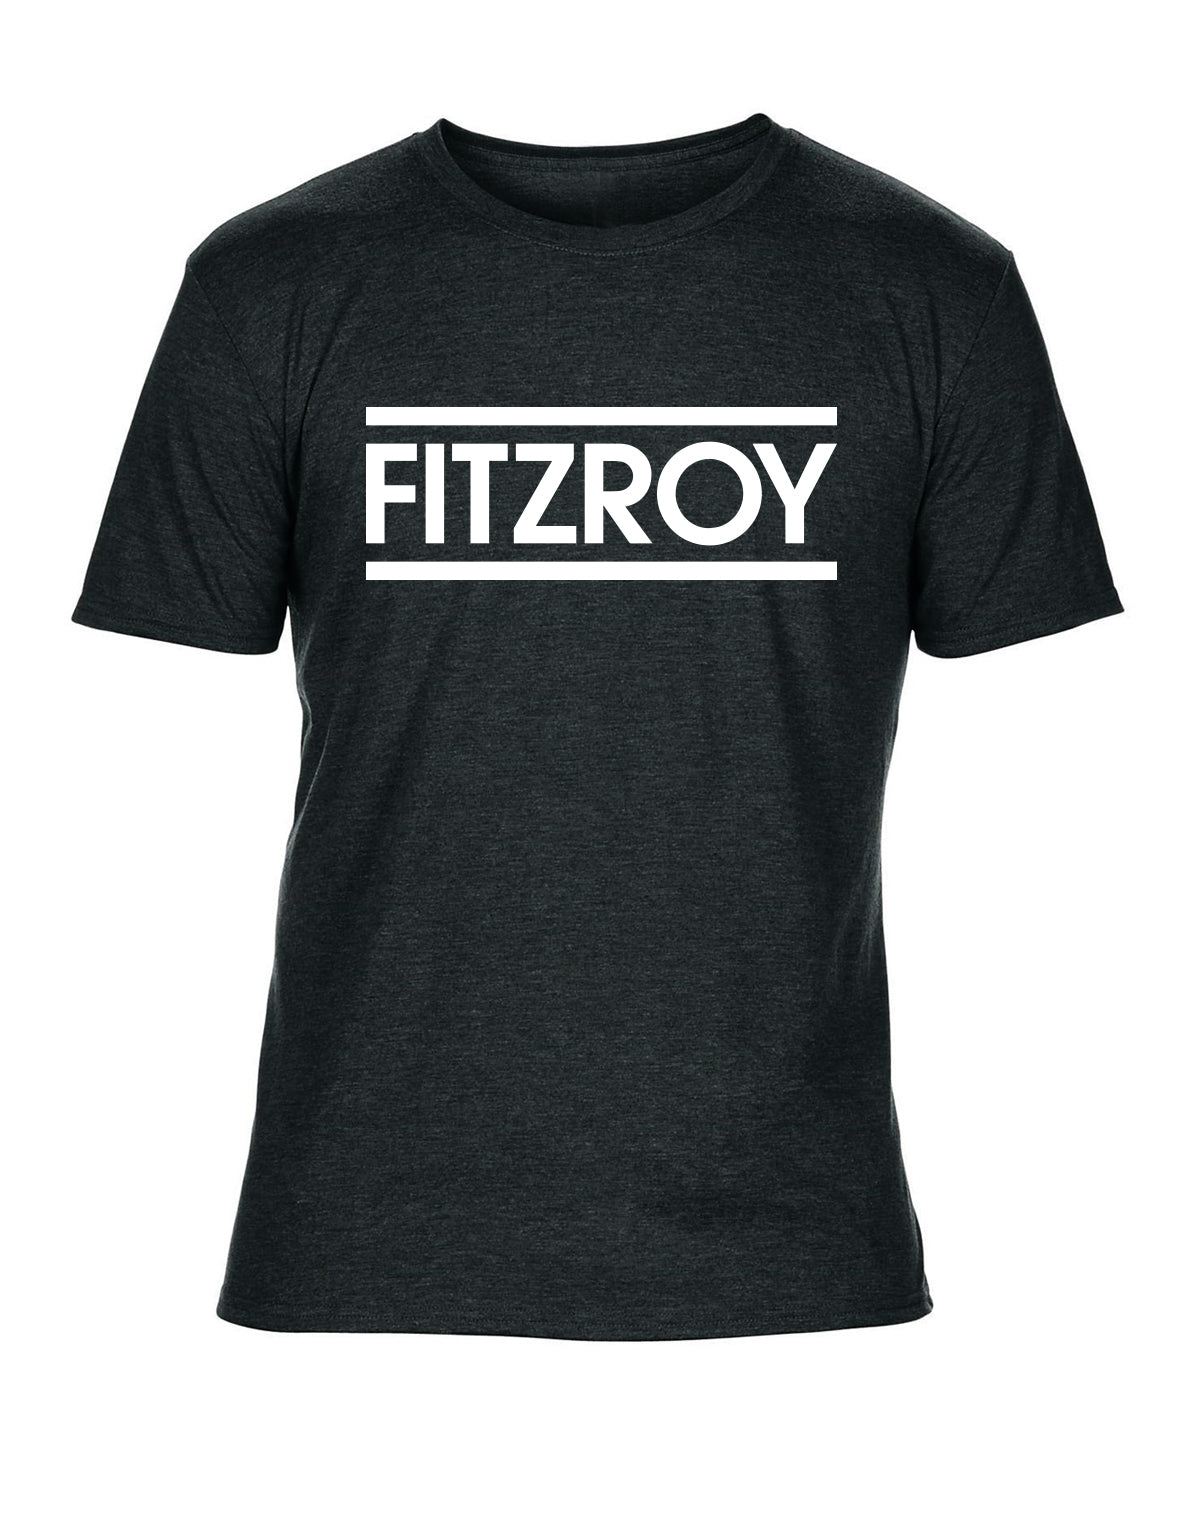 Fitzroy Elemental T-Shirt